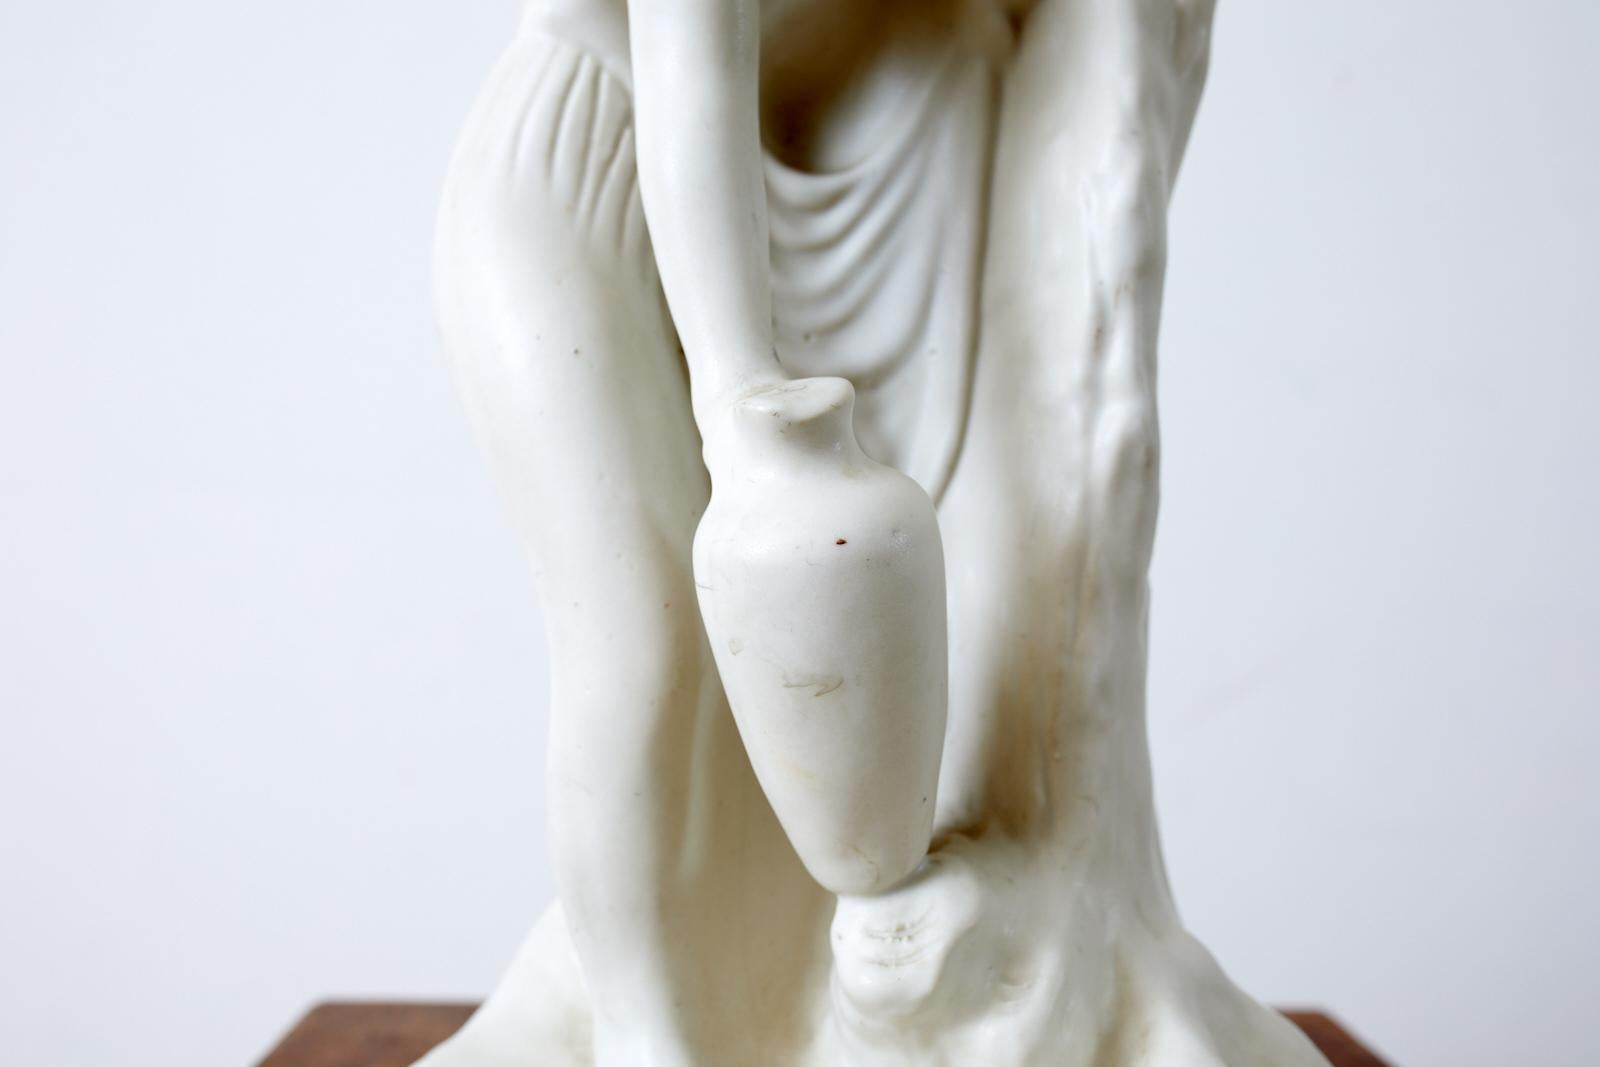 American Van Briggle Figural Sculpture Porcelain Table Lamp For Sale